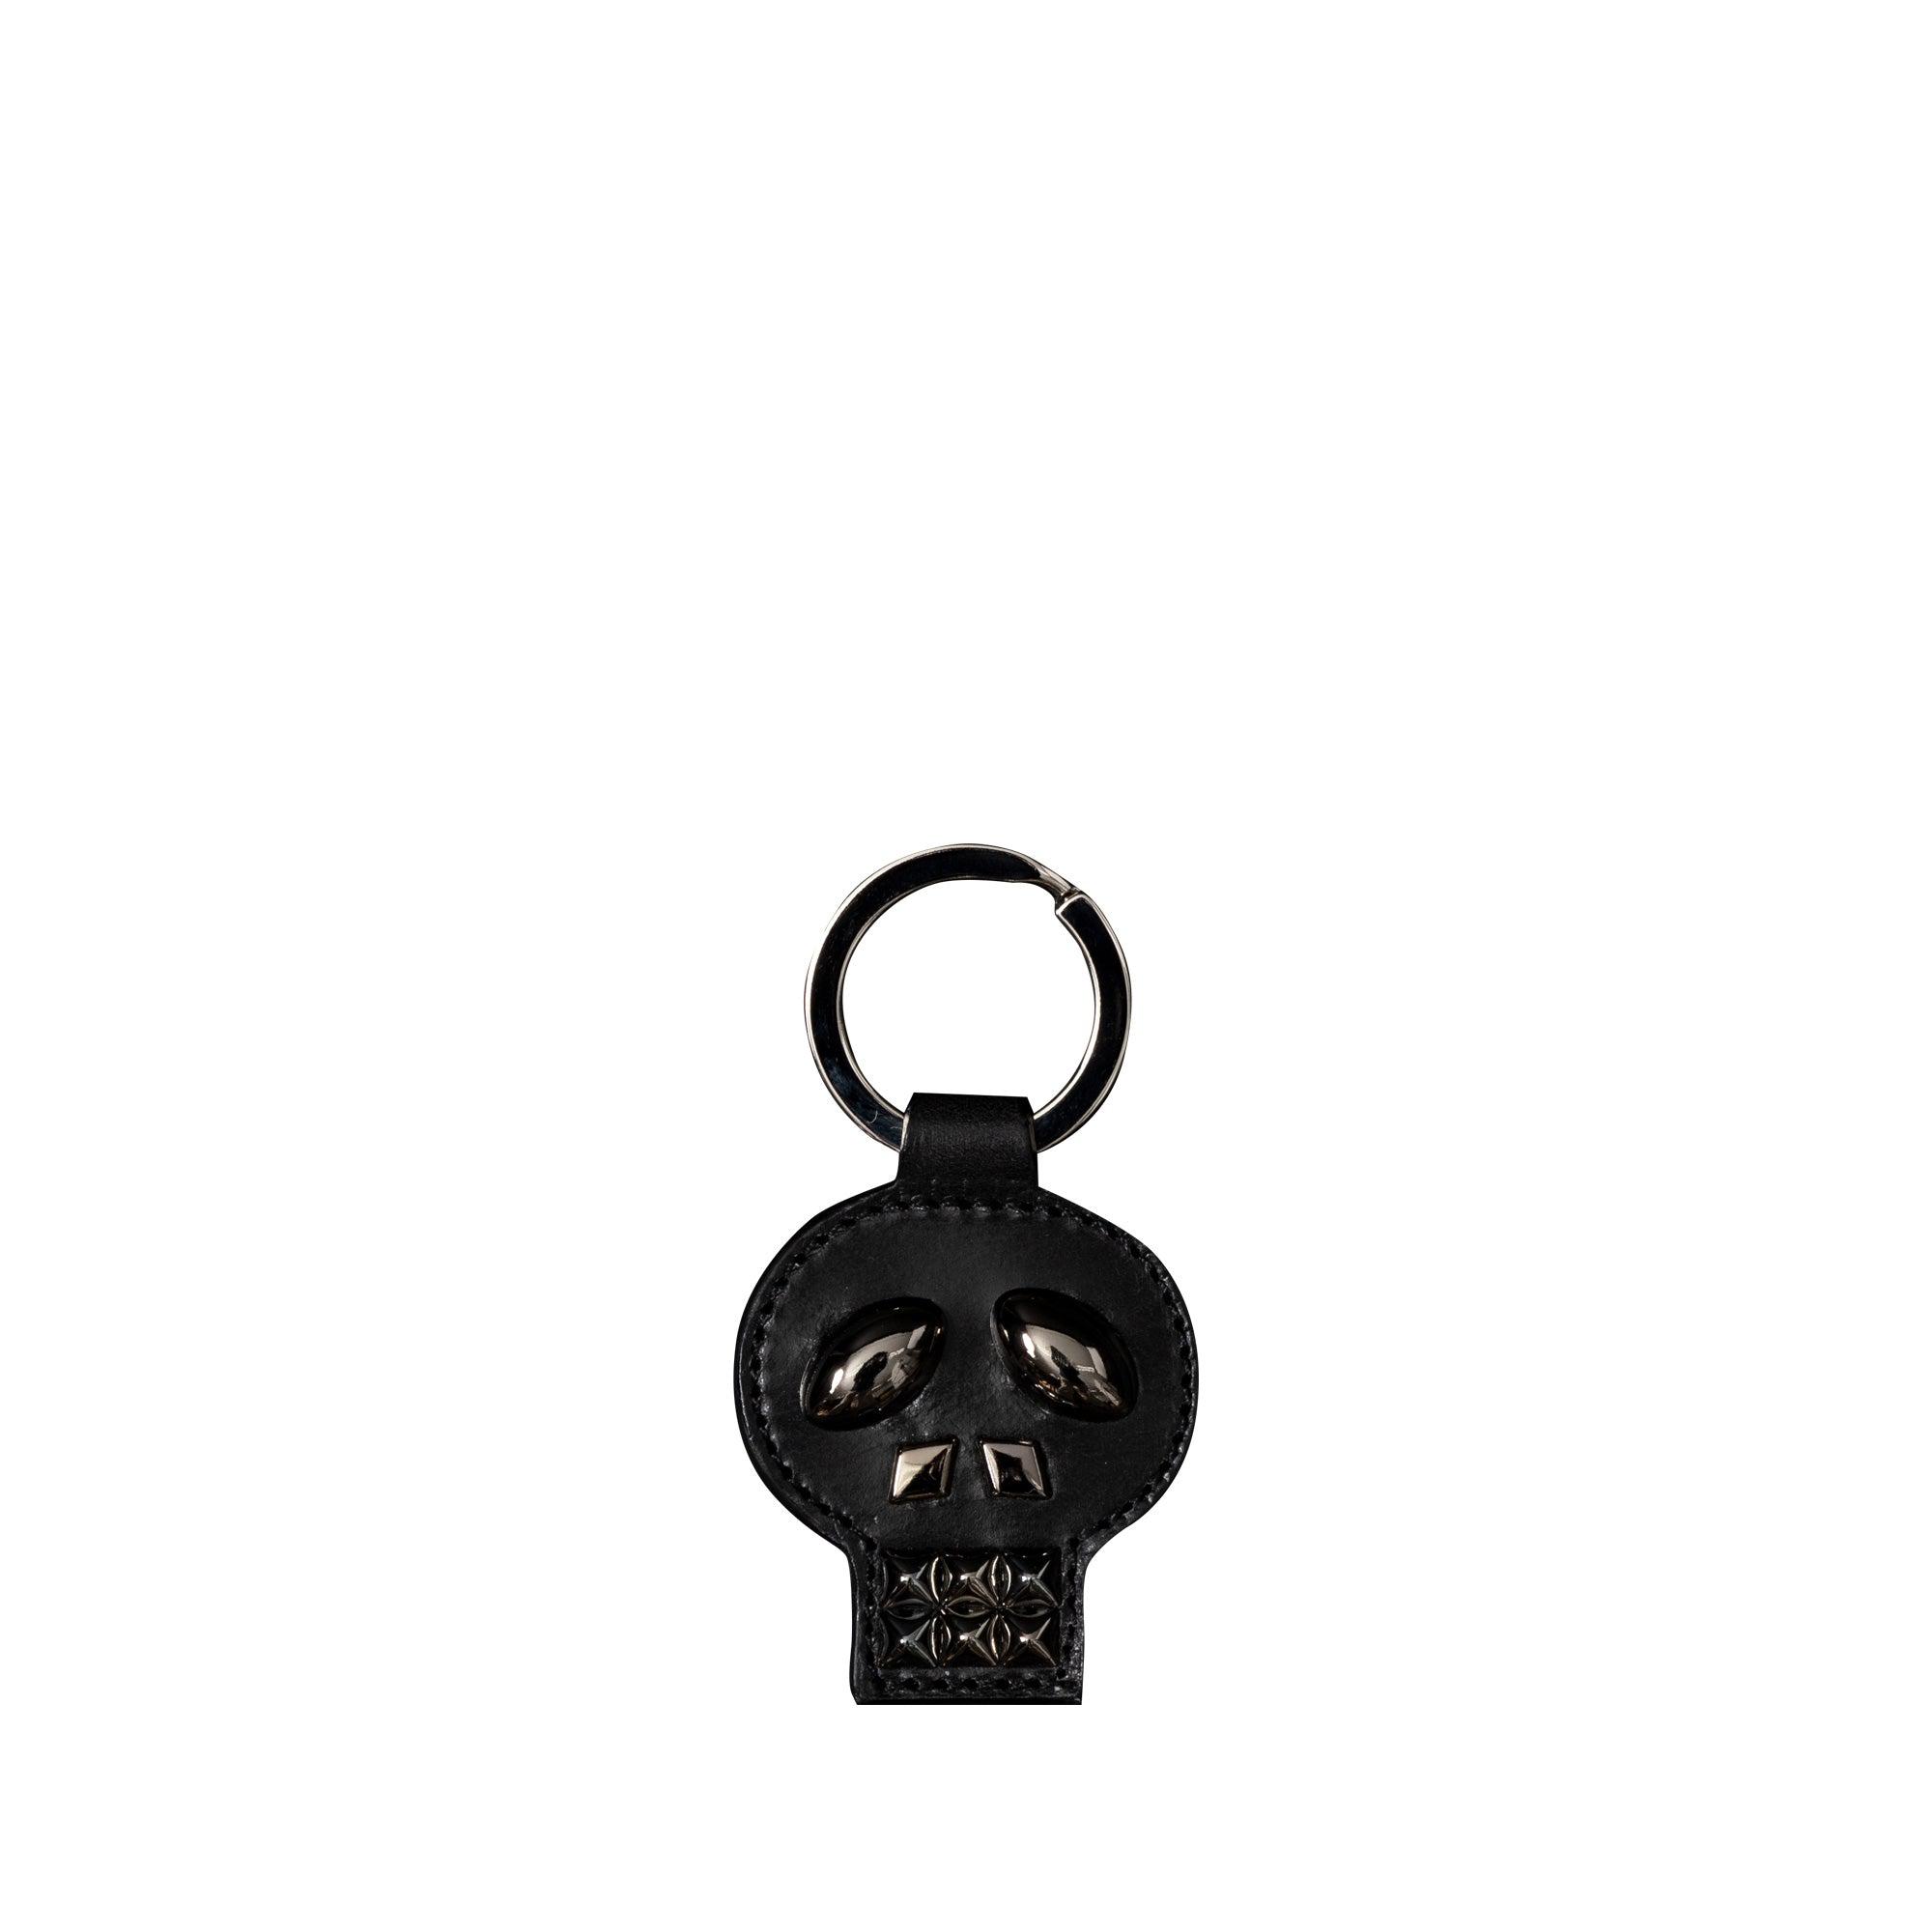 Comme des Garçons Black Market x Wolf's Head Skull Key Ring (Black) by BLACK MARKET